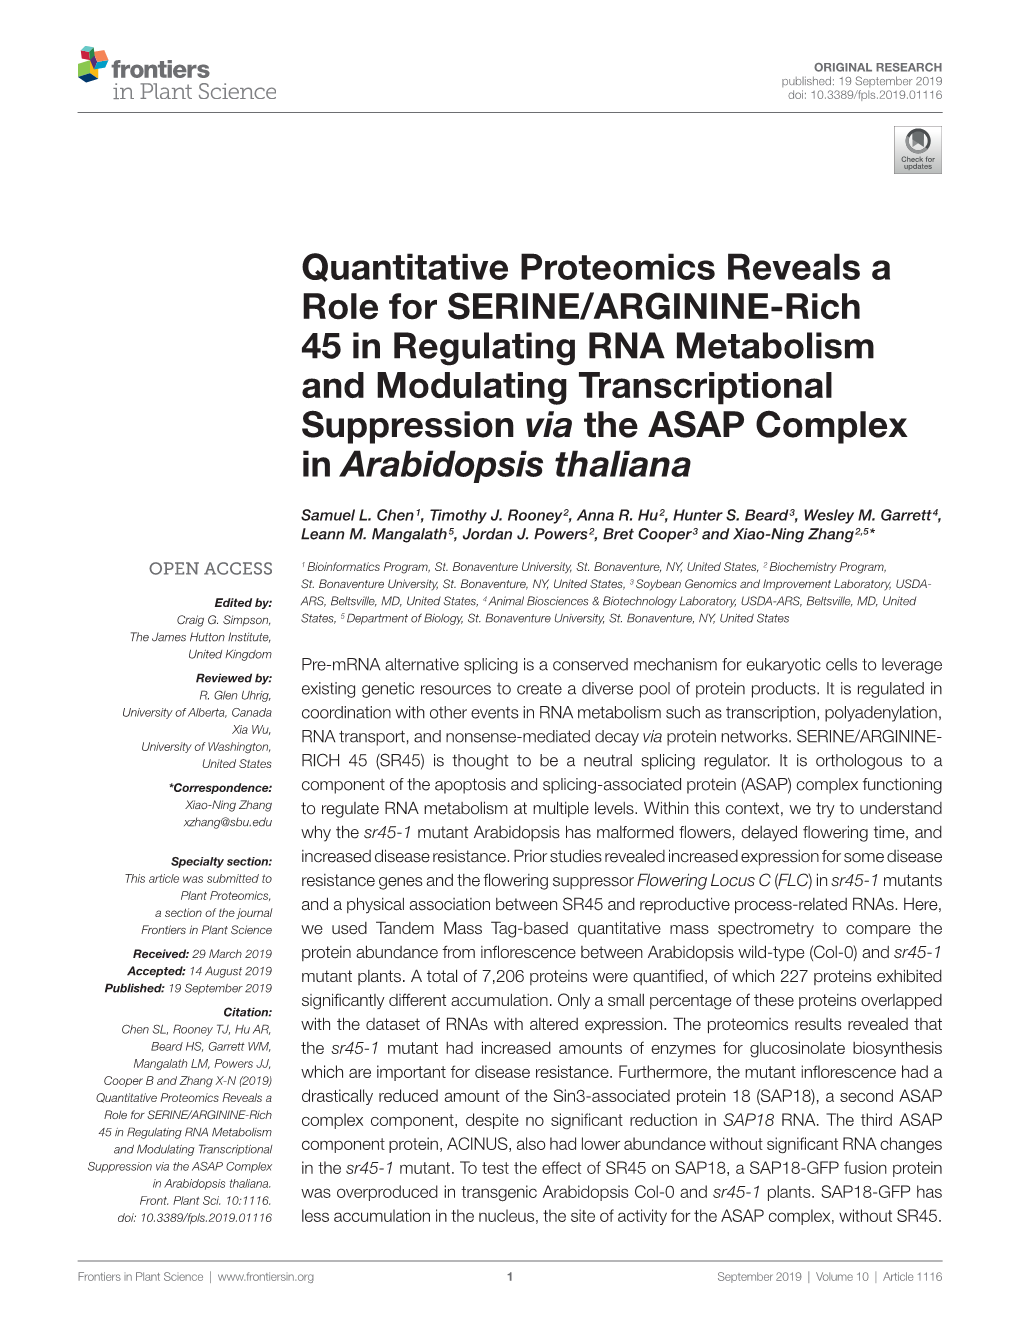 Quantitative Proteomics Reveals a Role for SERINE/ARGININE-Rich